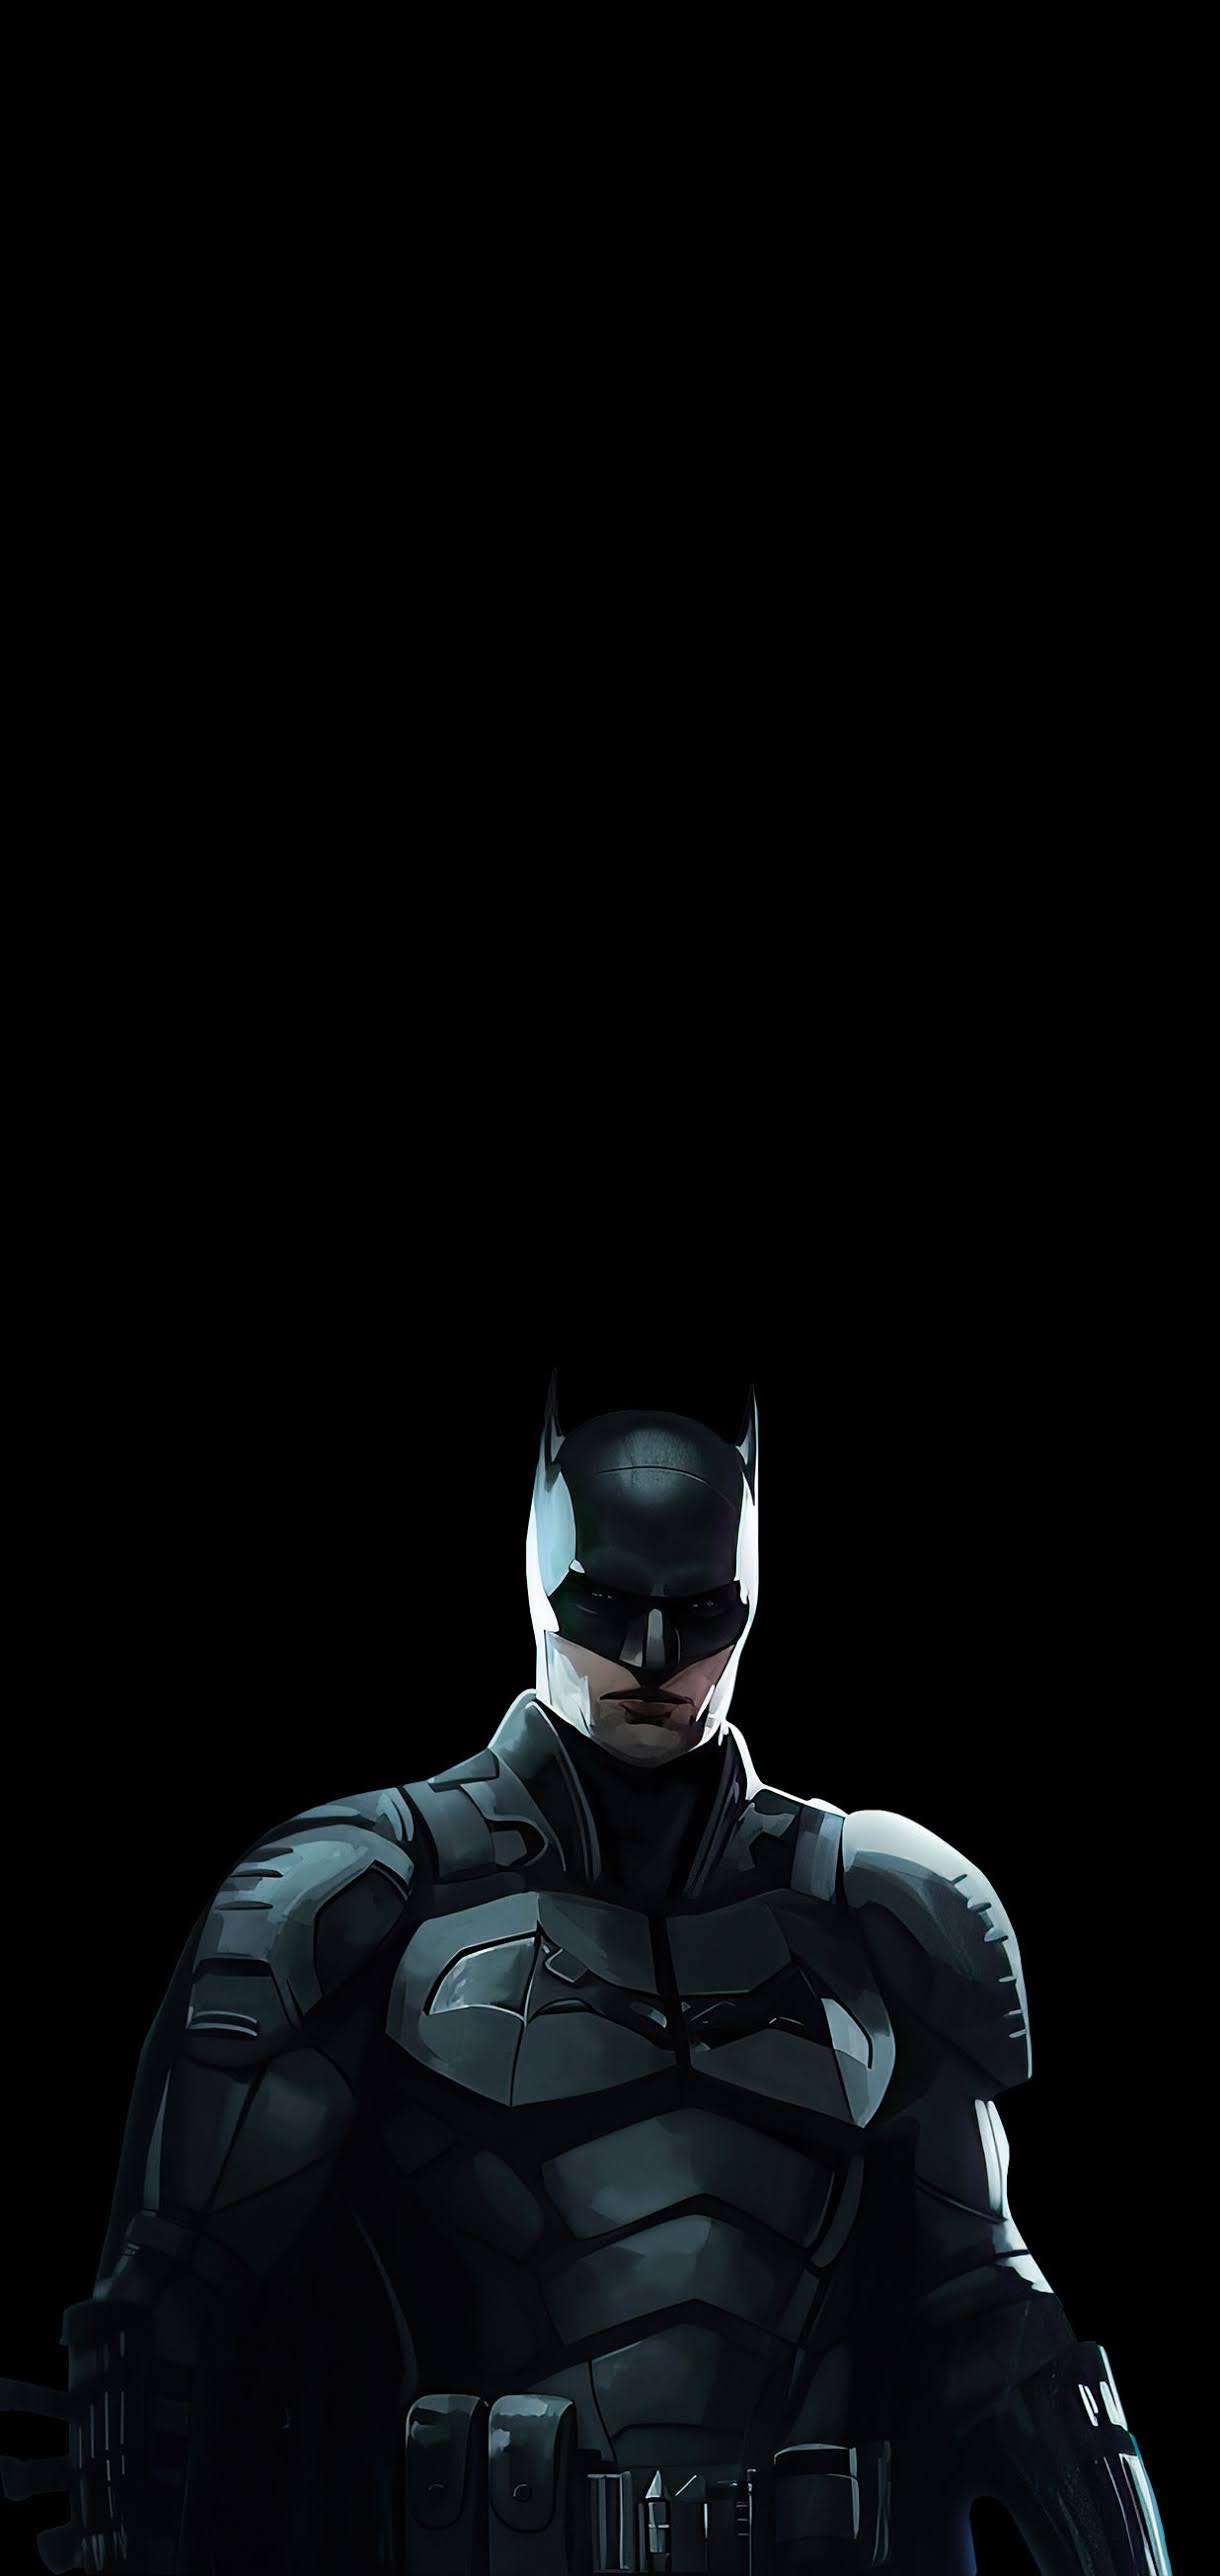 Batman phone wallpaper - HeroWall Backgrounds